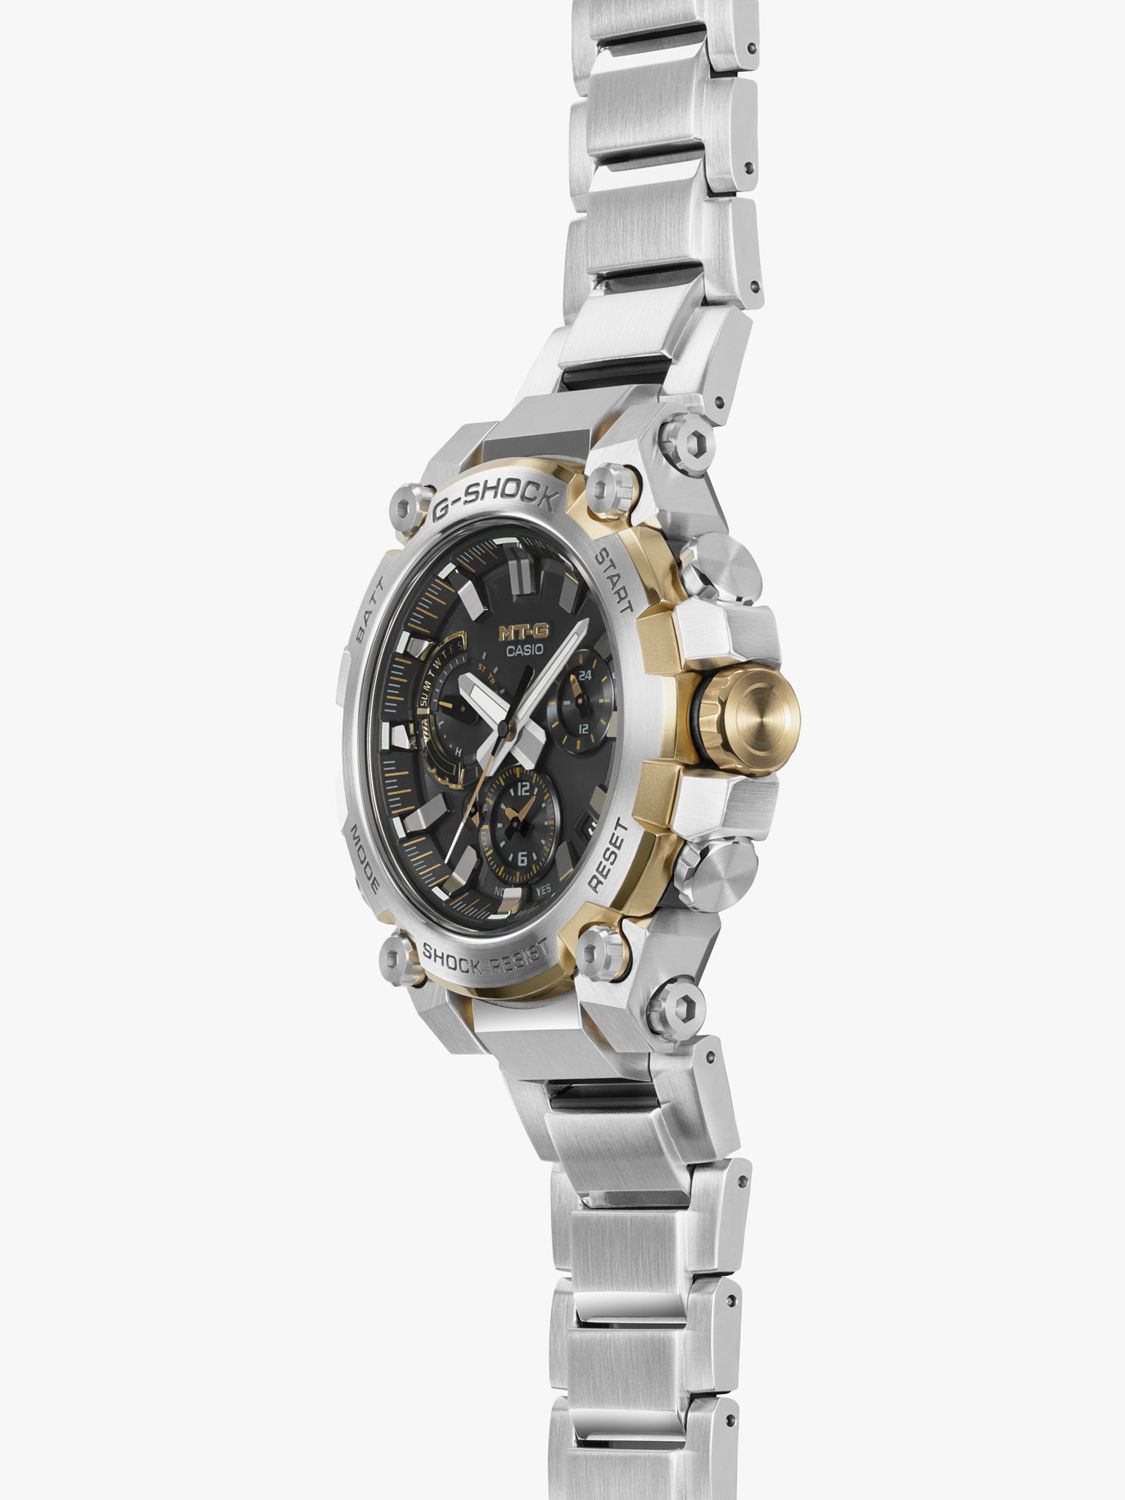 Casio MTG-B3000D-1A9ER Men's G-SHOCK Solar Bracelet Strap Smart Watch, Silver